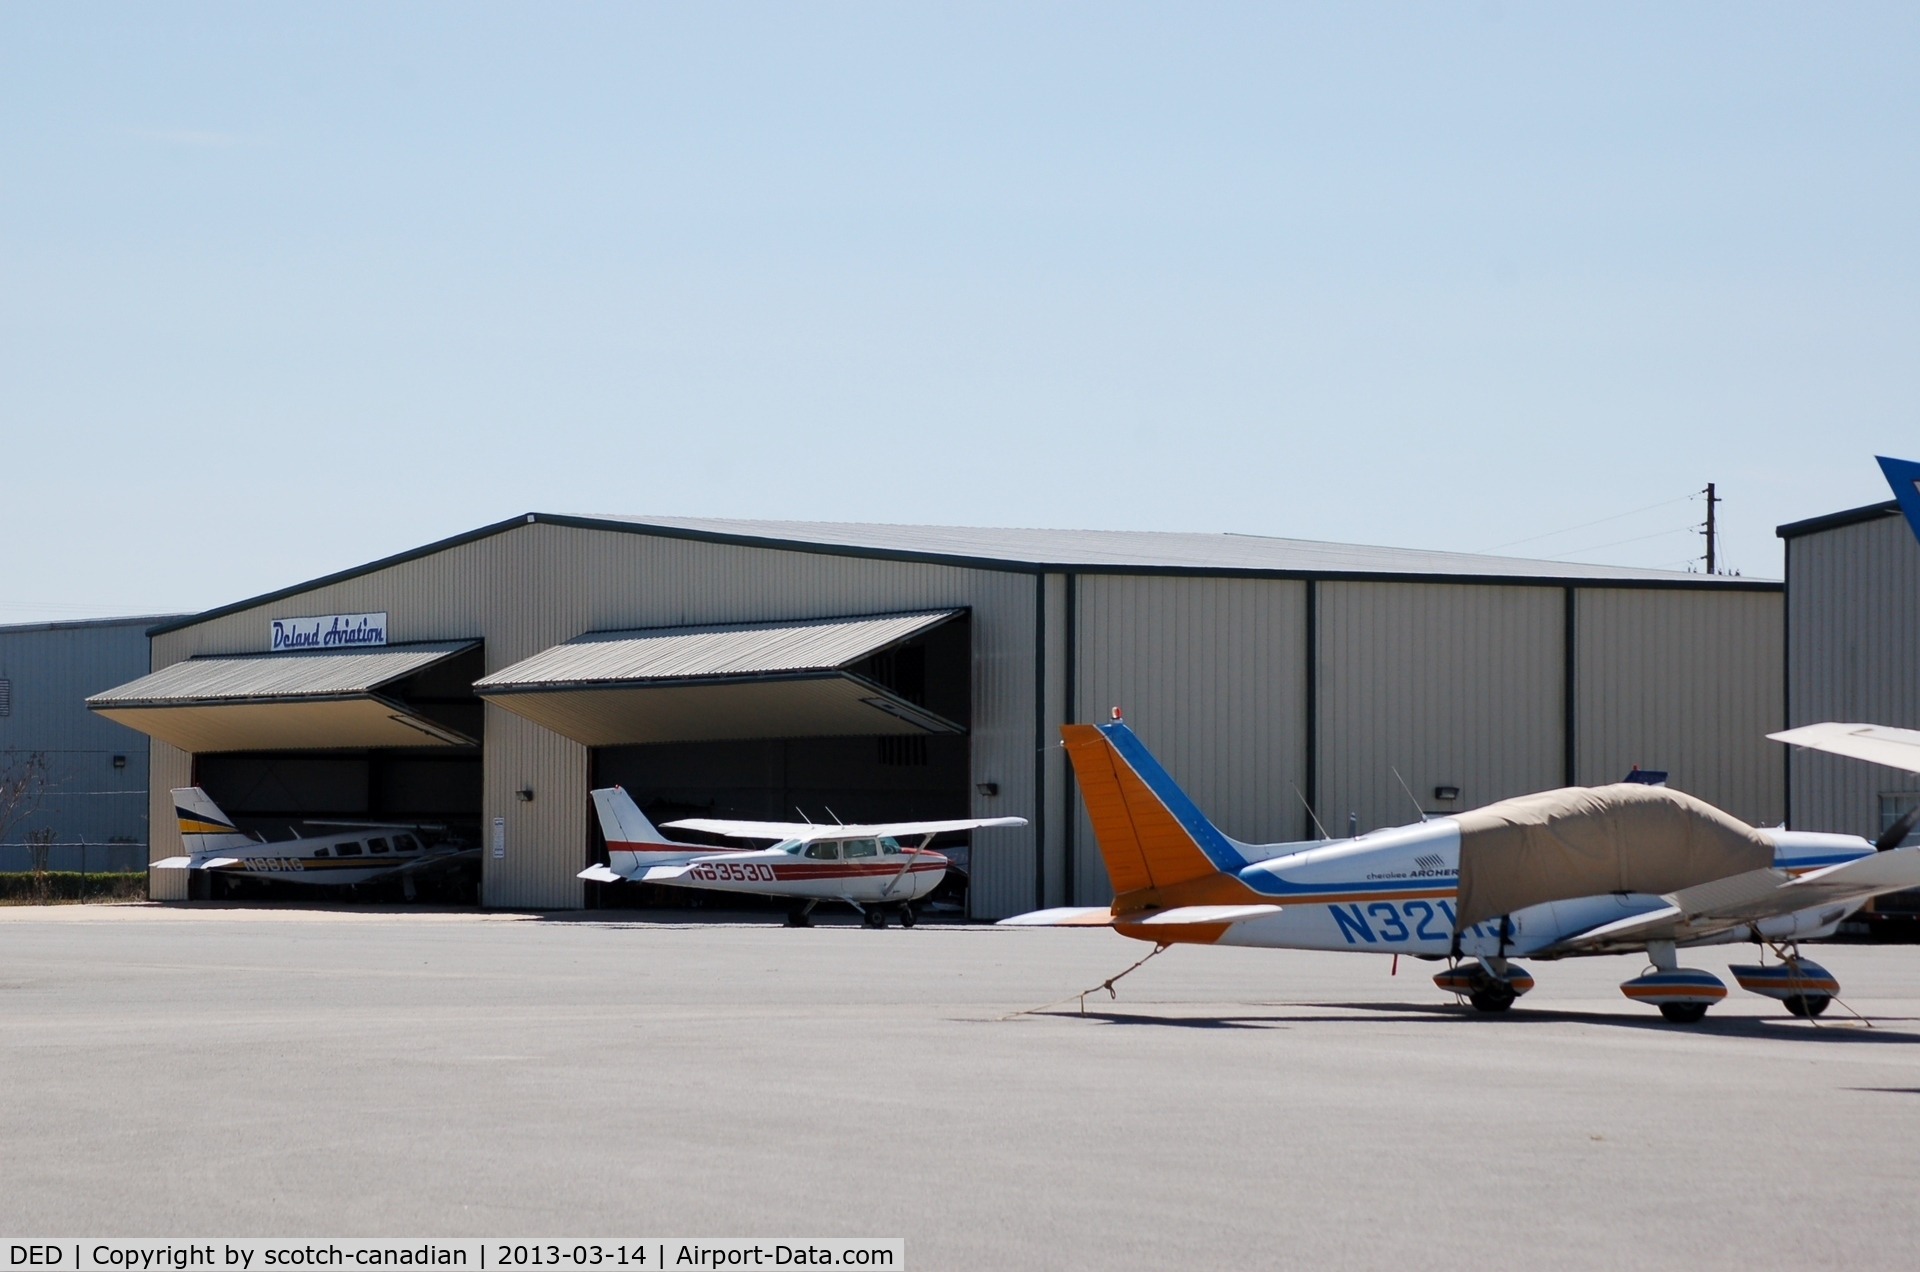 Deland Muni-sidney H Taylor Field Airport (DED) - DeLand Aviation at DeLand Municipal - Sidney H. Taylor Field, DeLand, FL